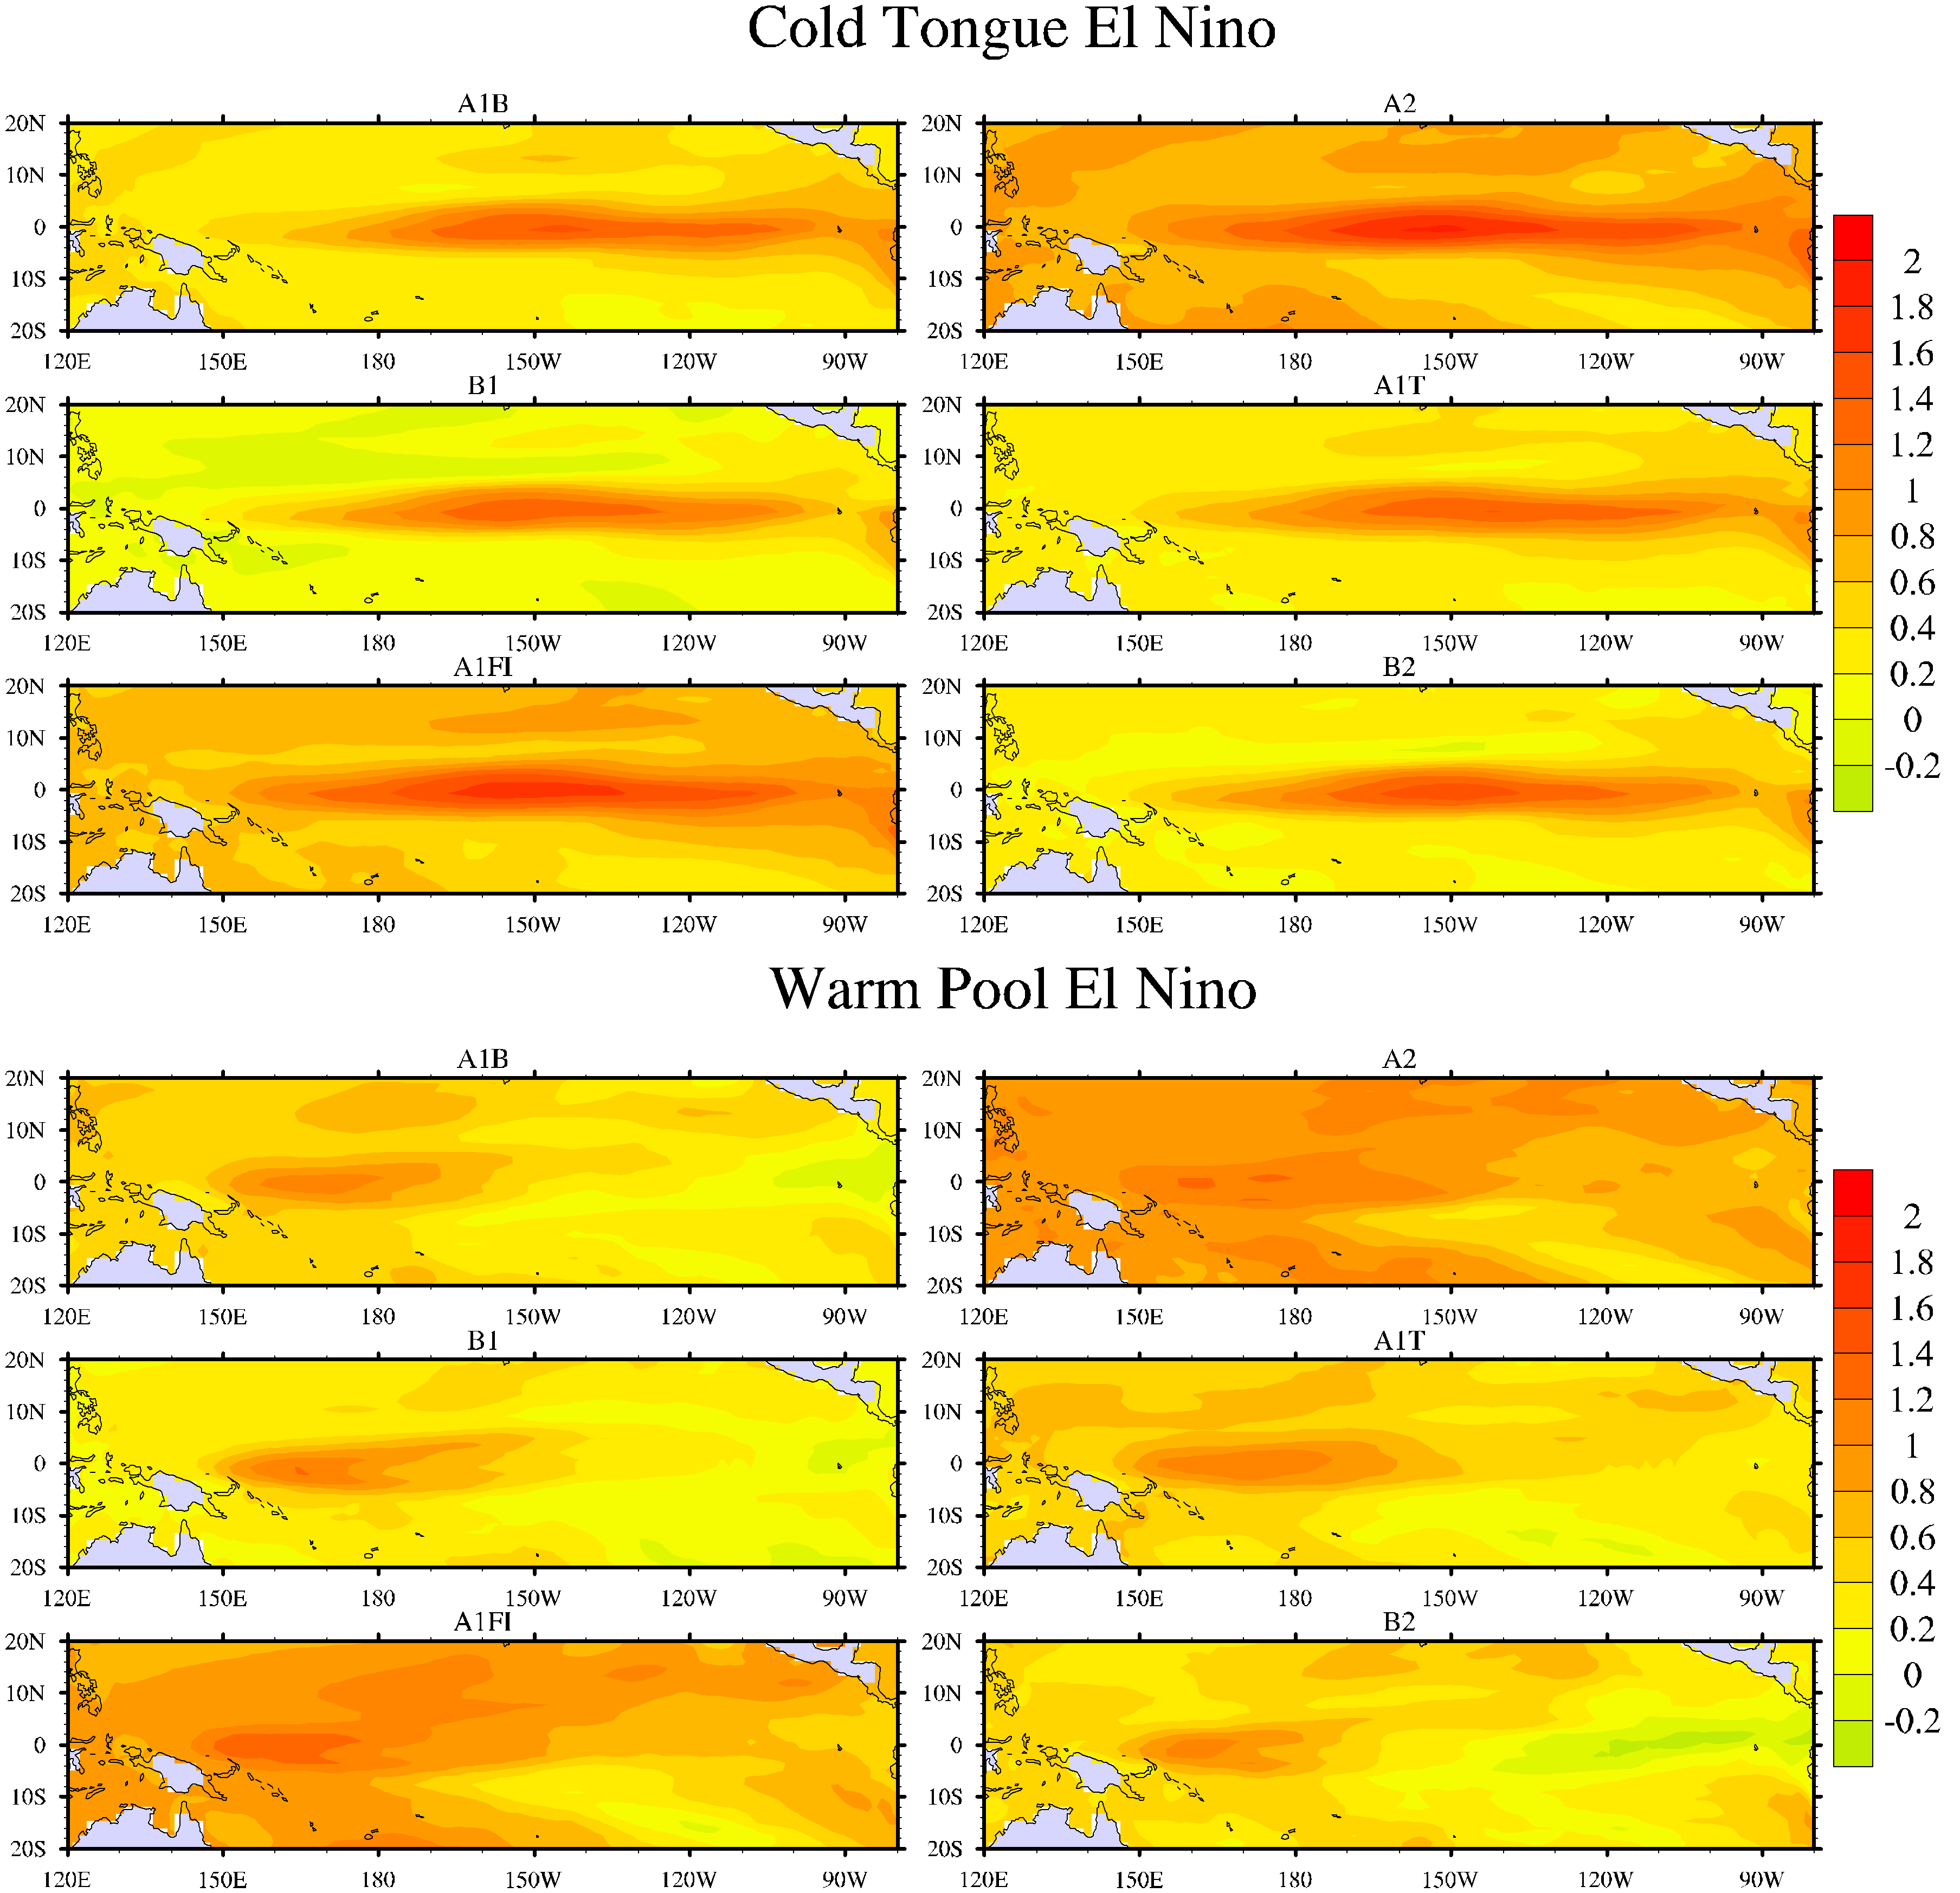 Figure 1.22. Anomalies of sea surface temperature for Cold Tongue El Nino(upper panel) and Warm Pool El Nino (lower panel) in six scenario experiments.